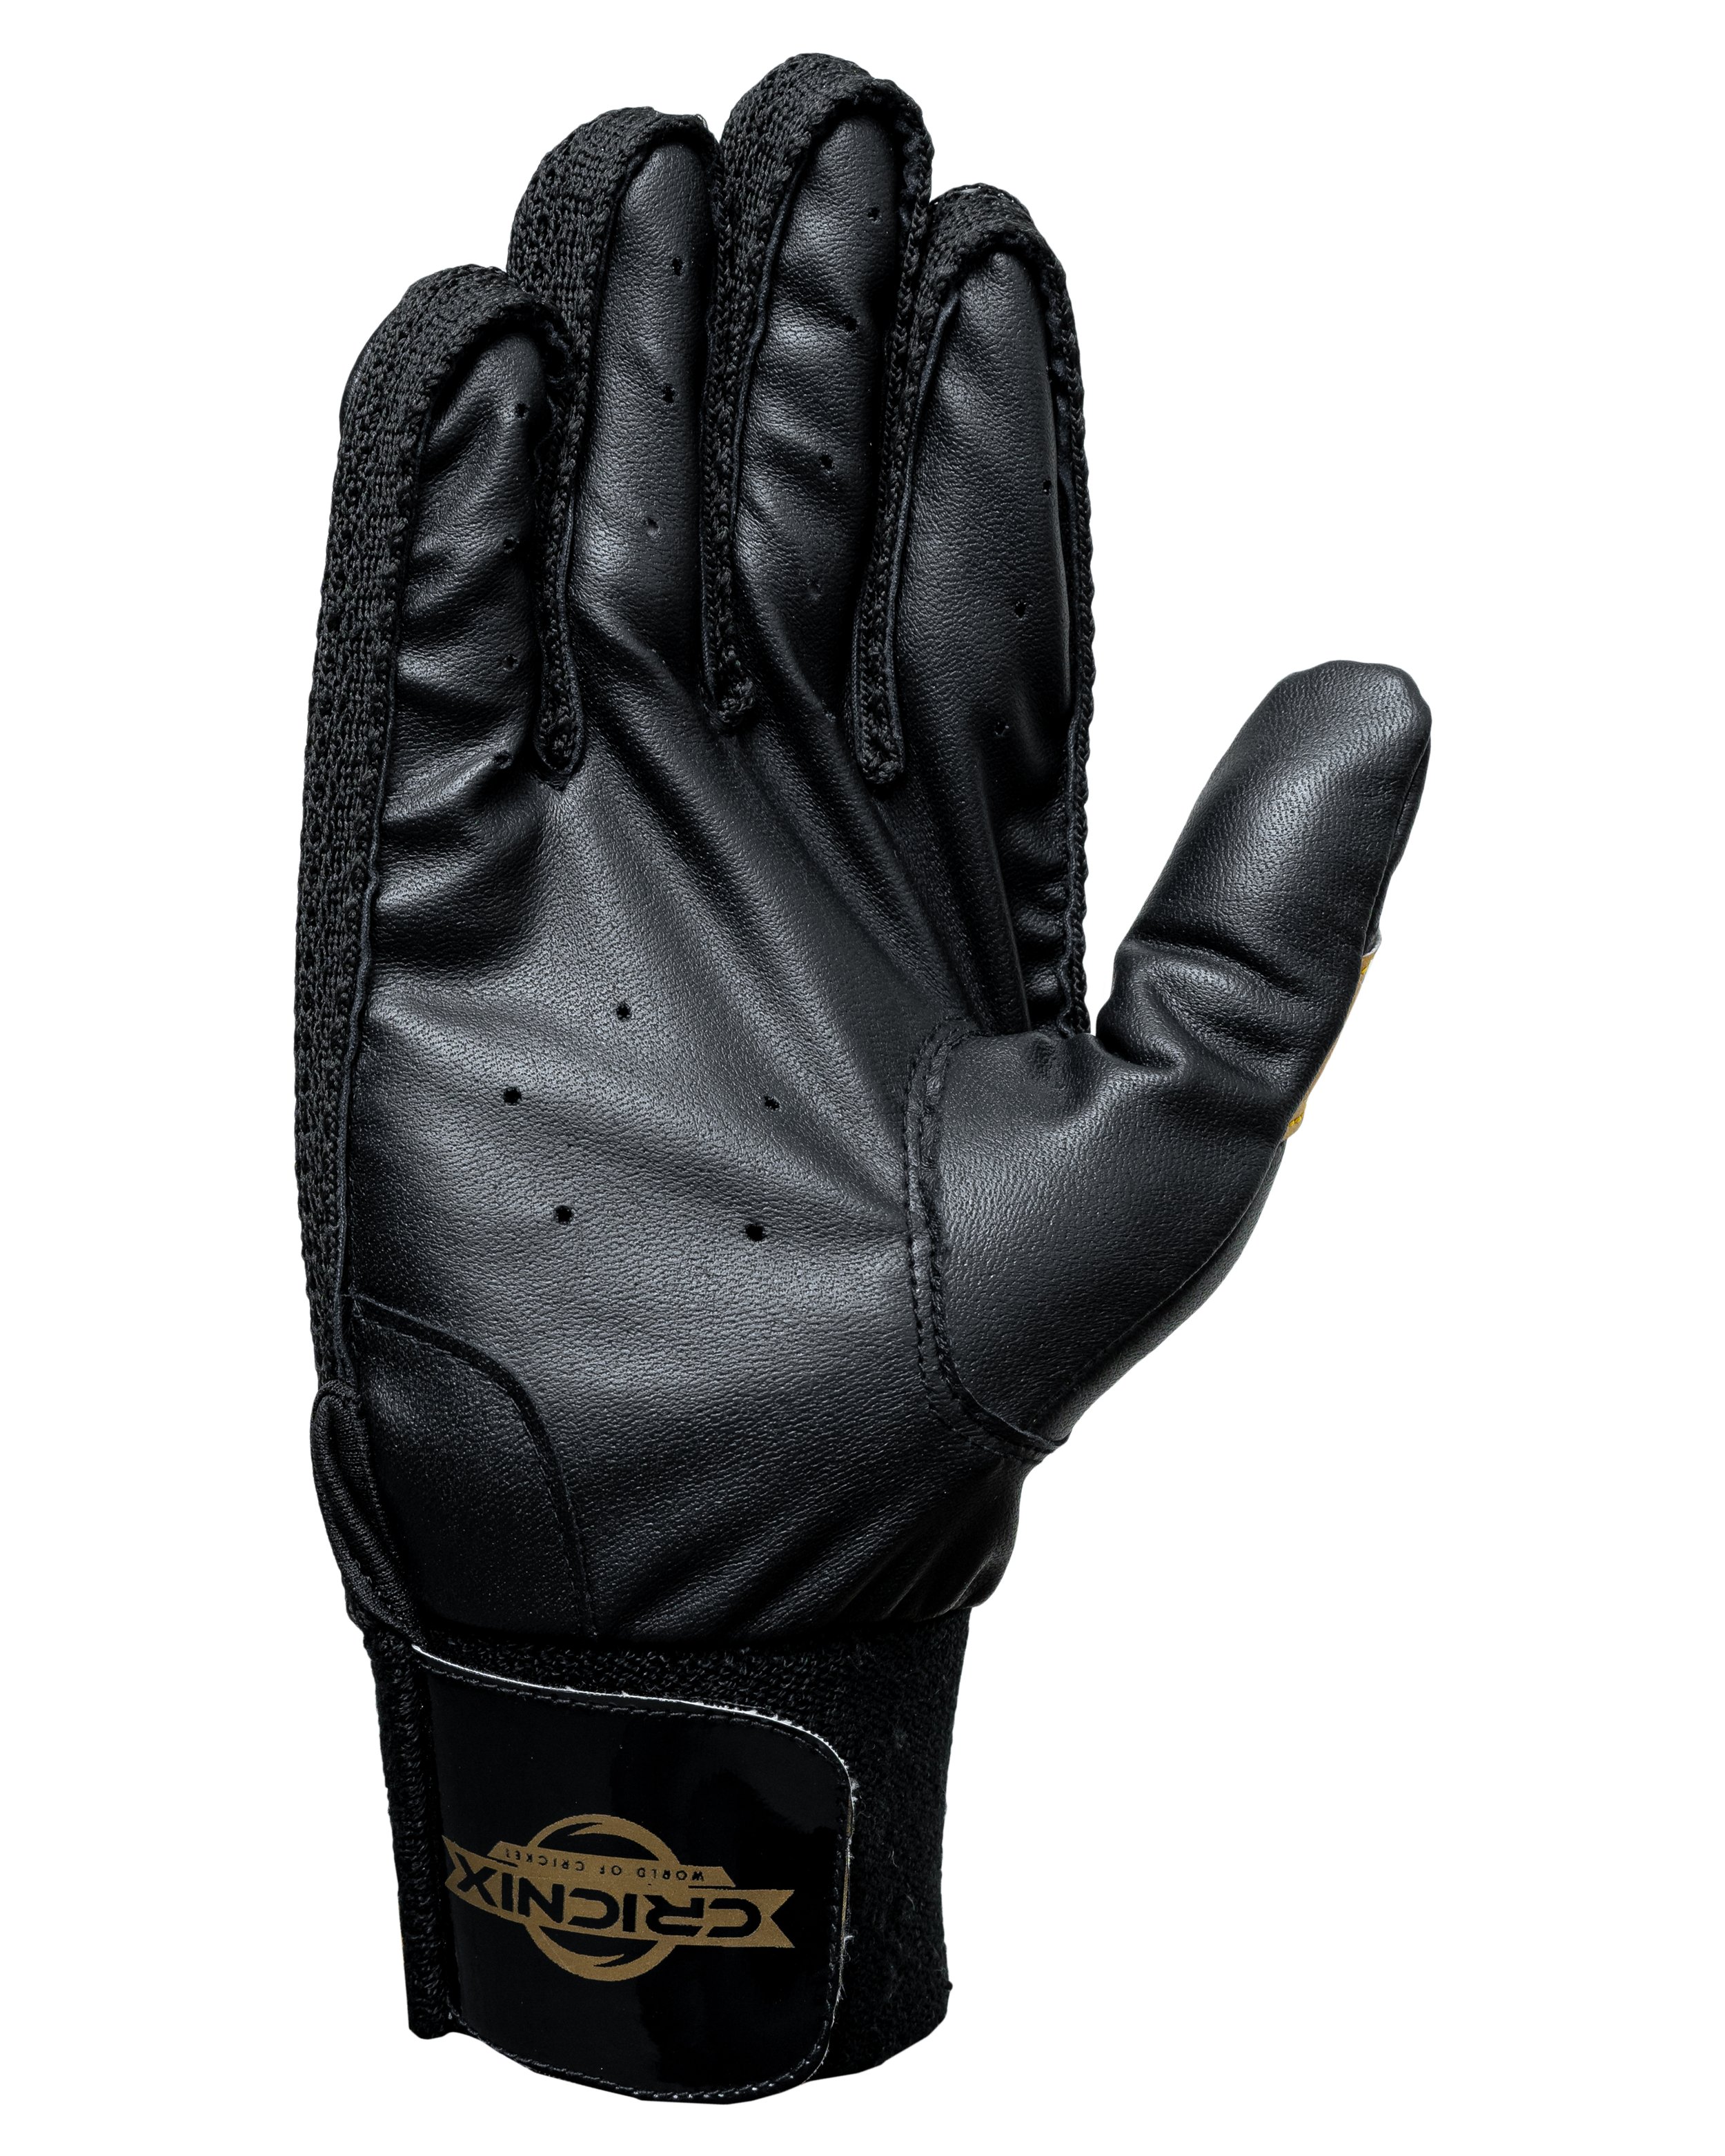 Black Gloves Front.jpg